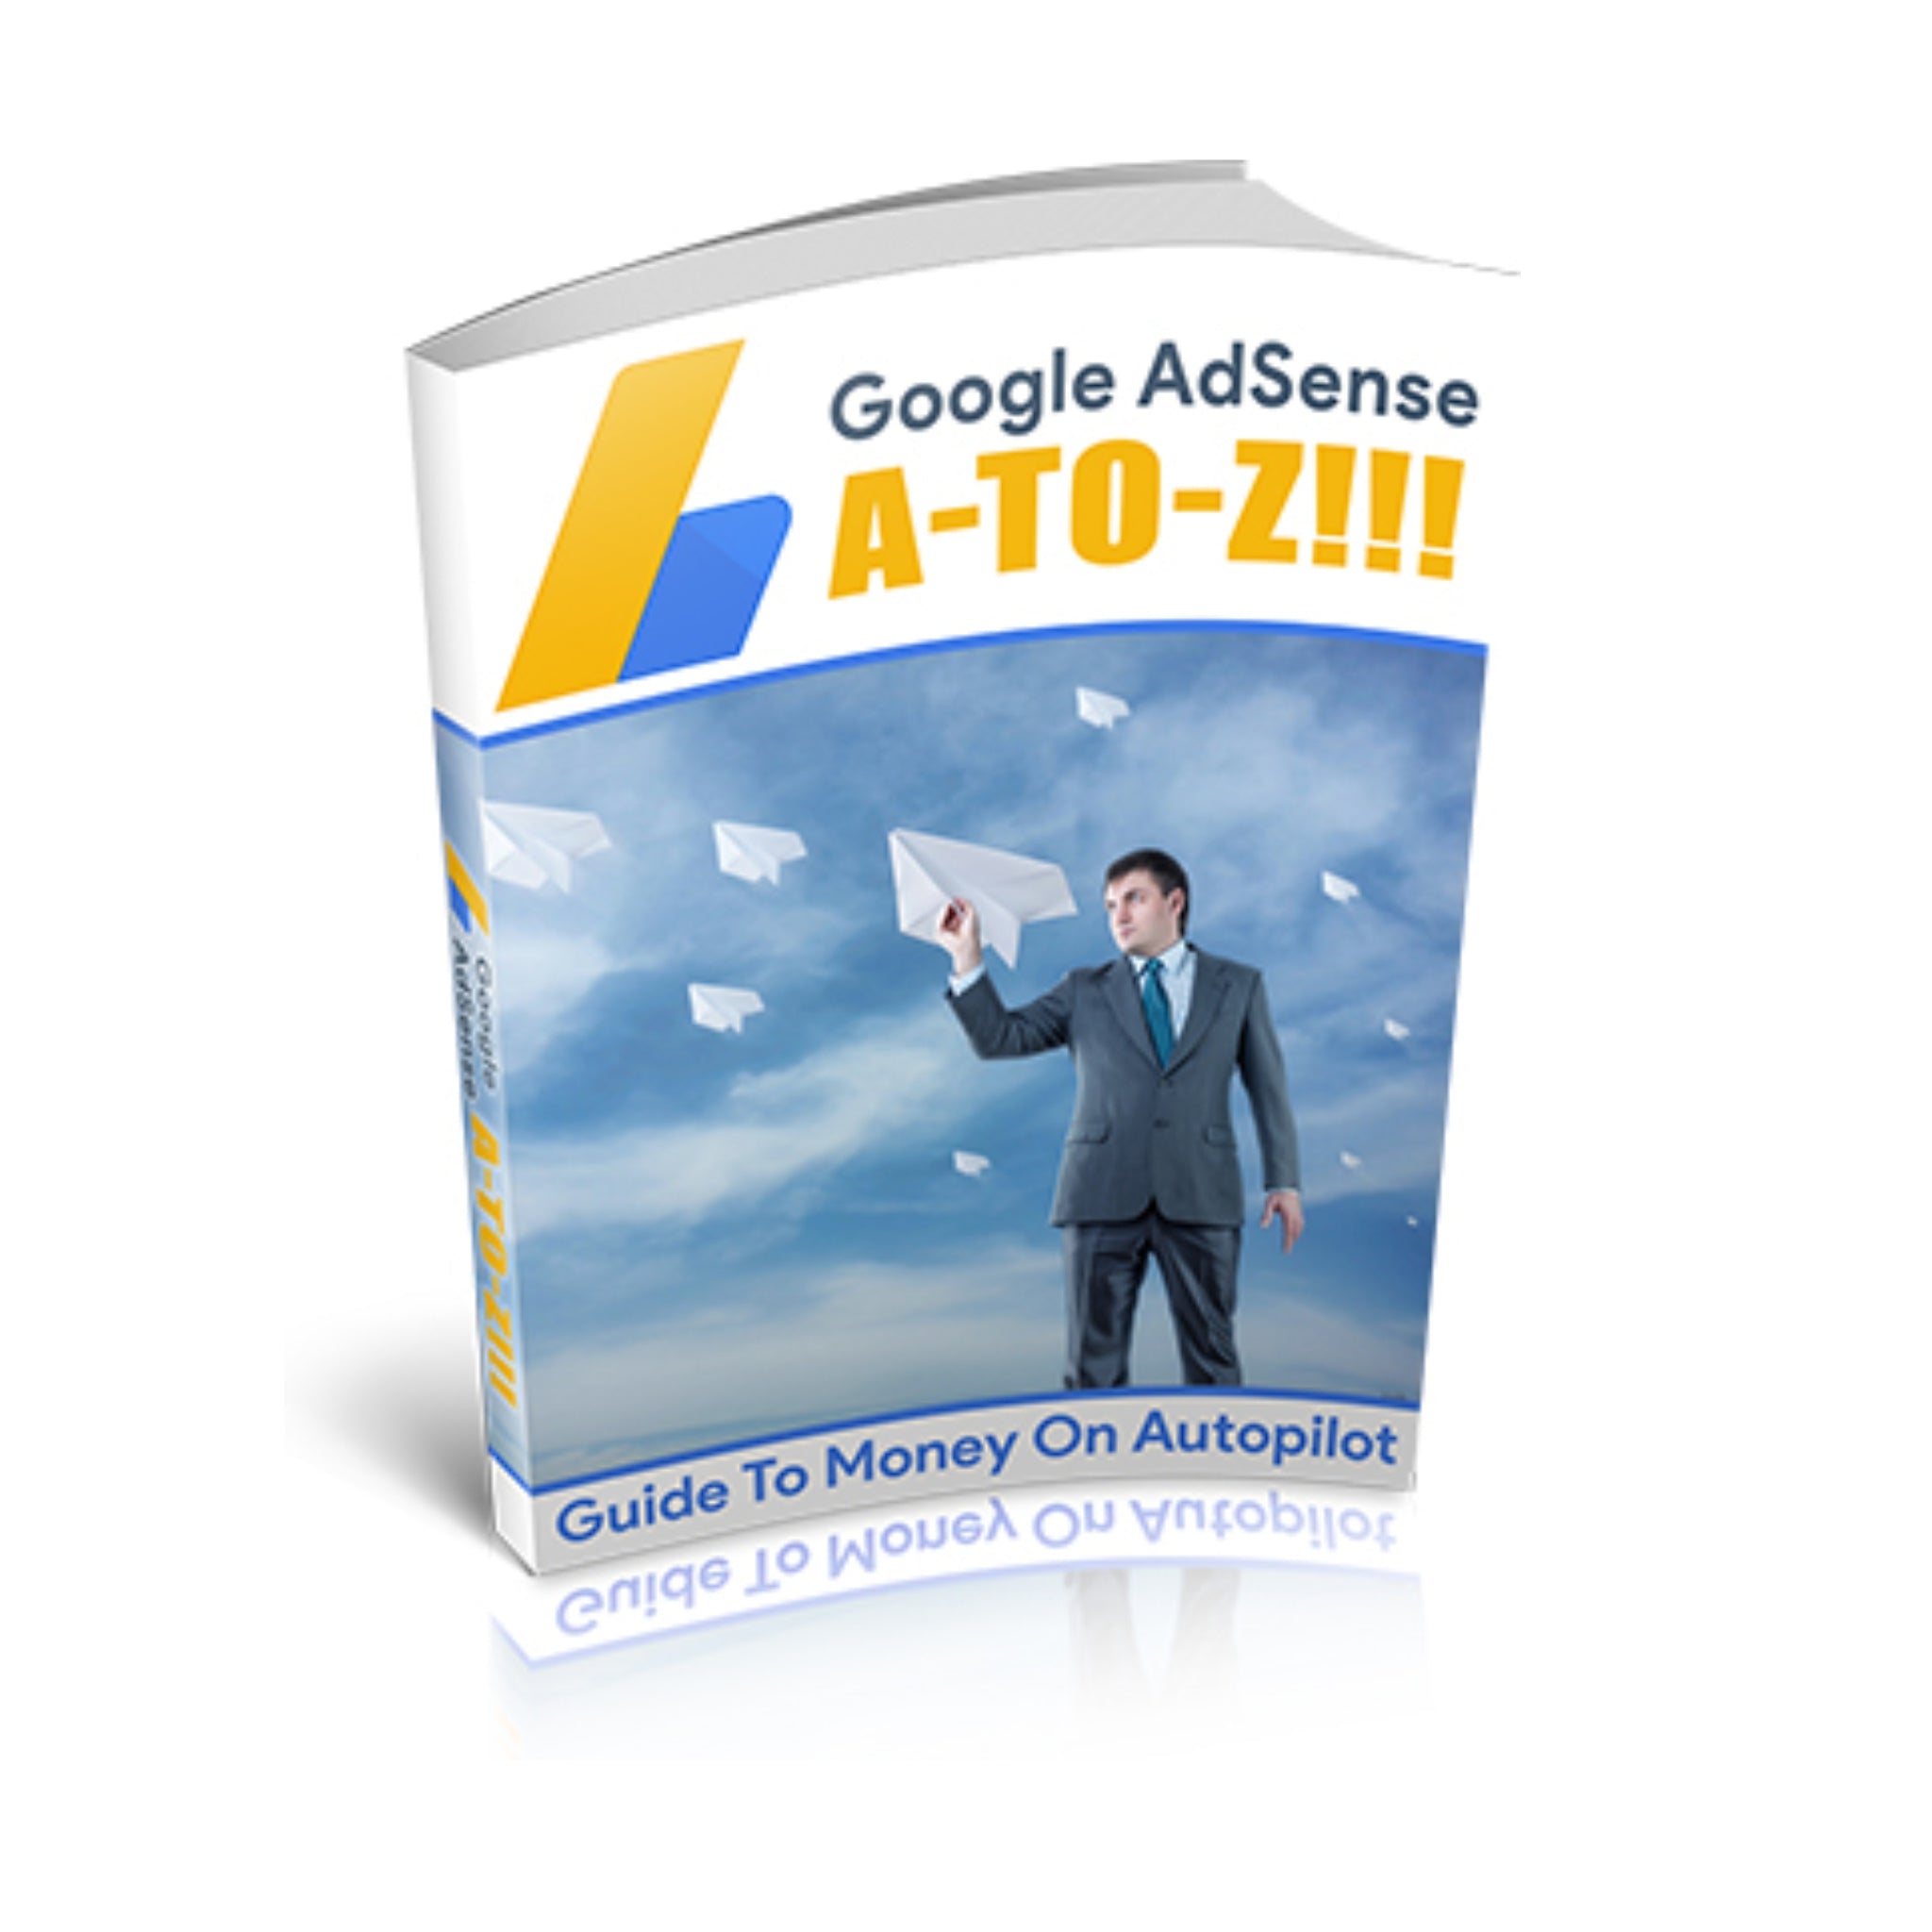 Google AdSense A to Z Ebook